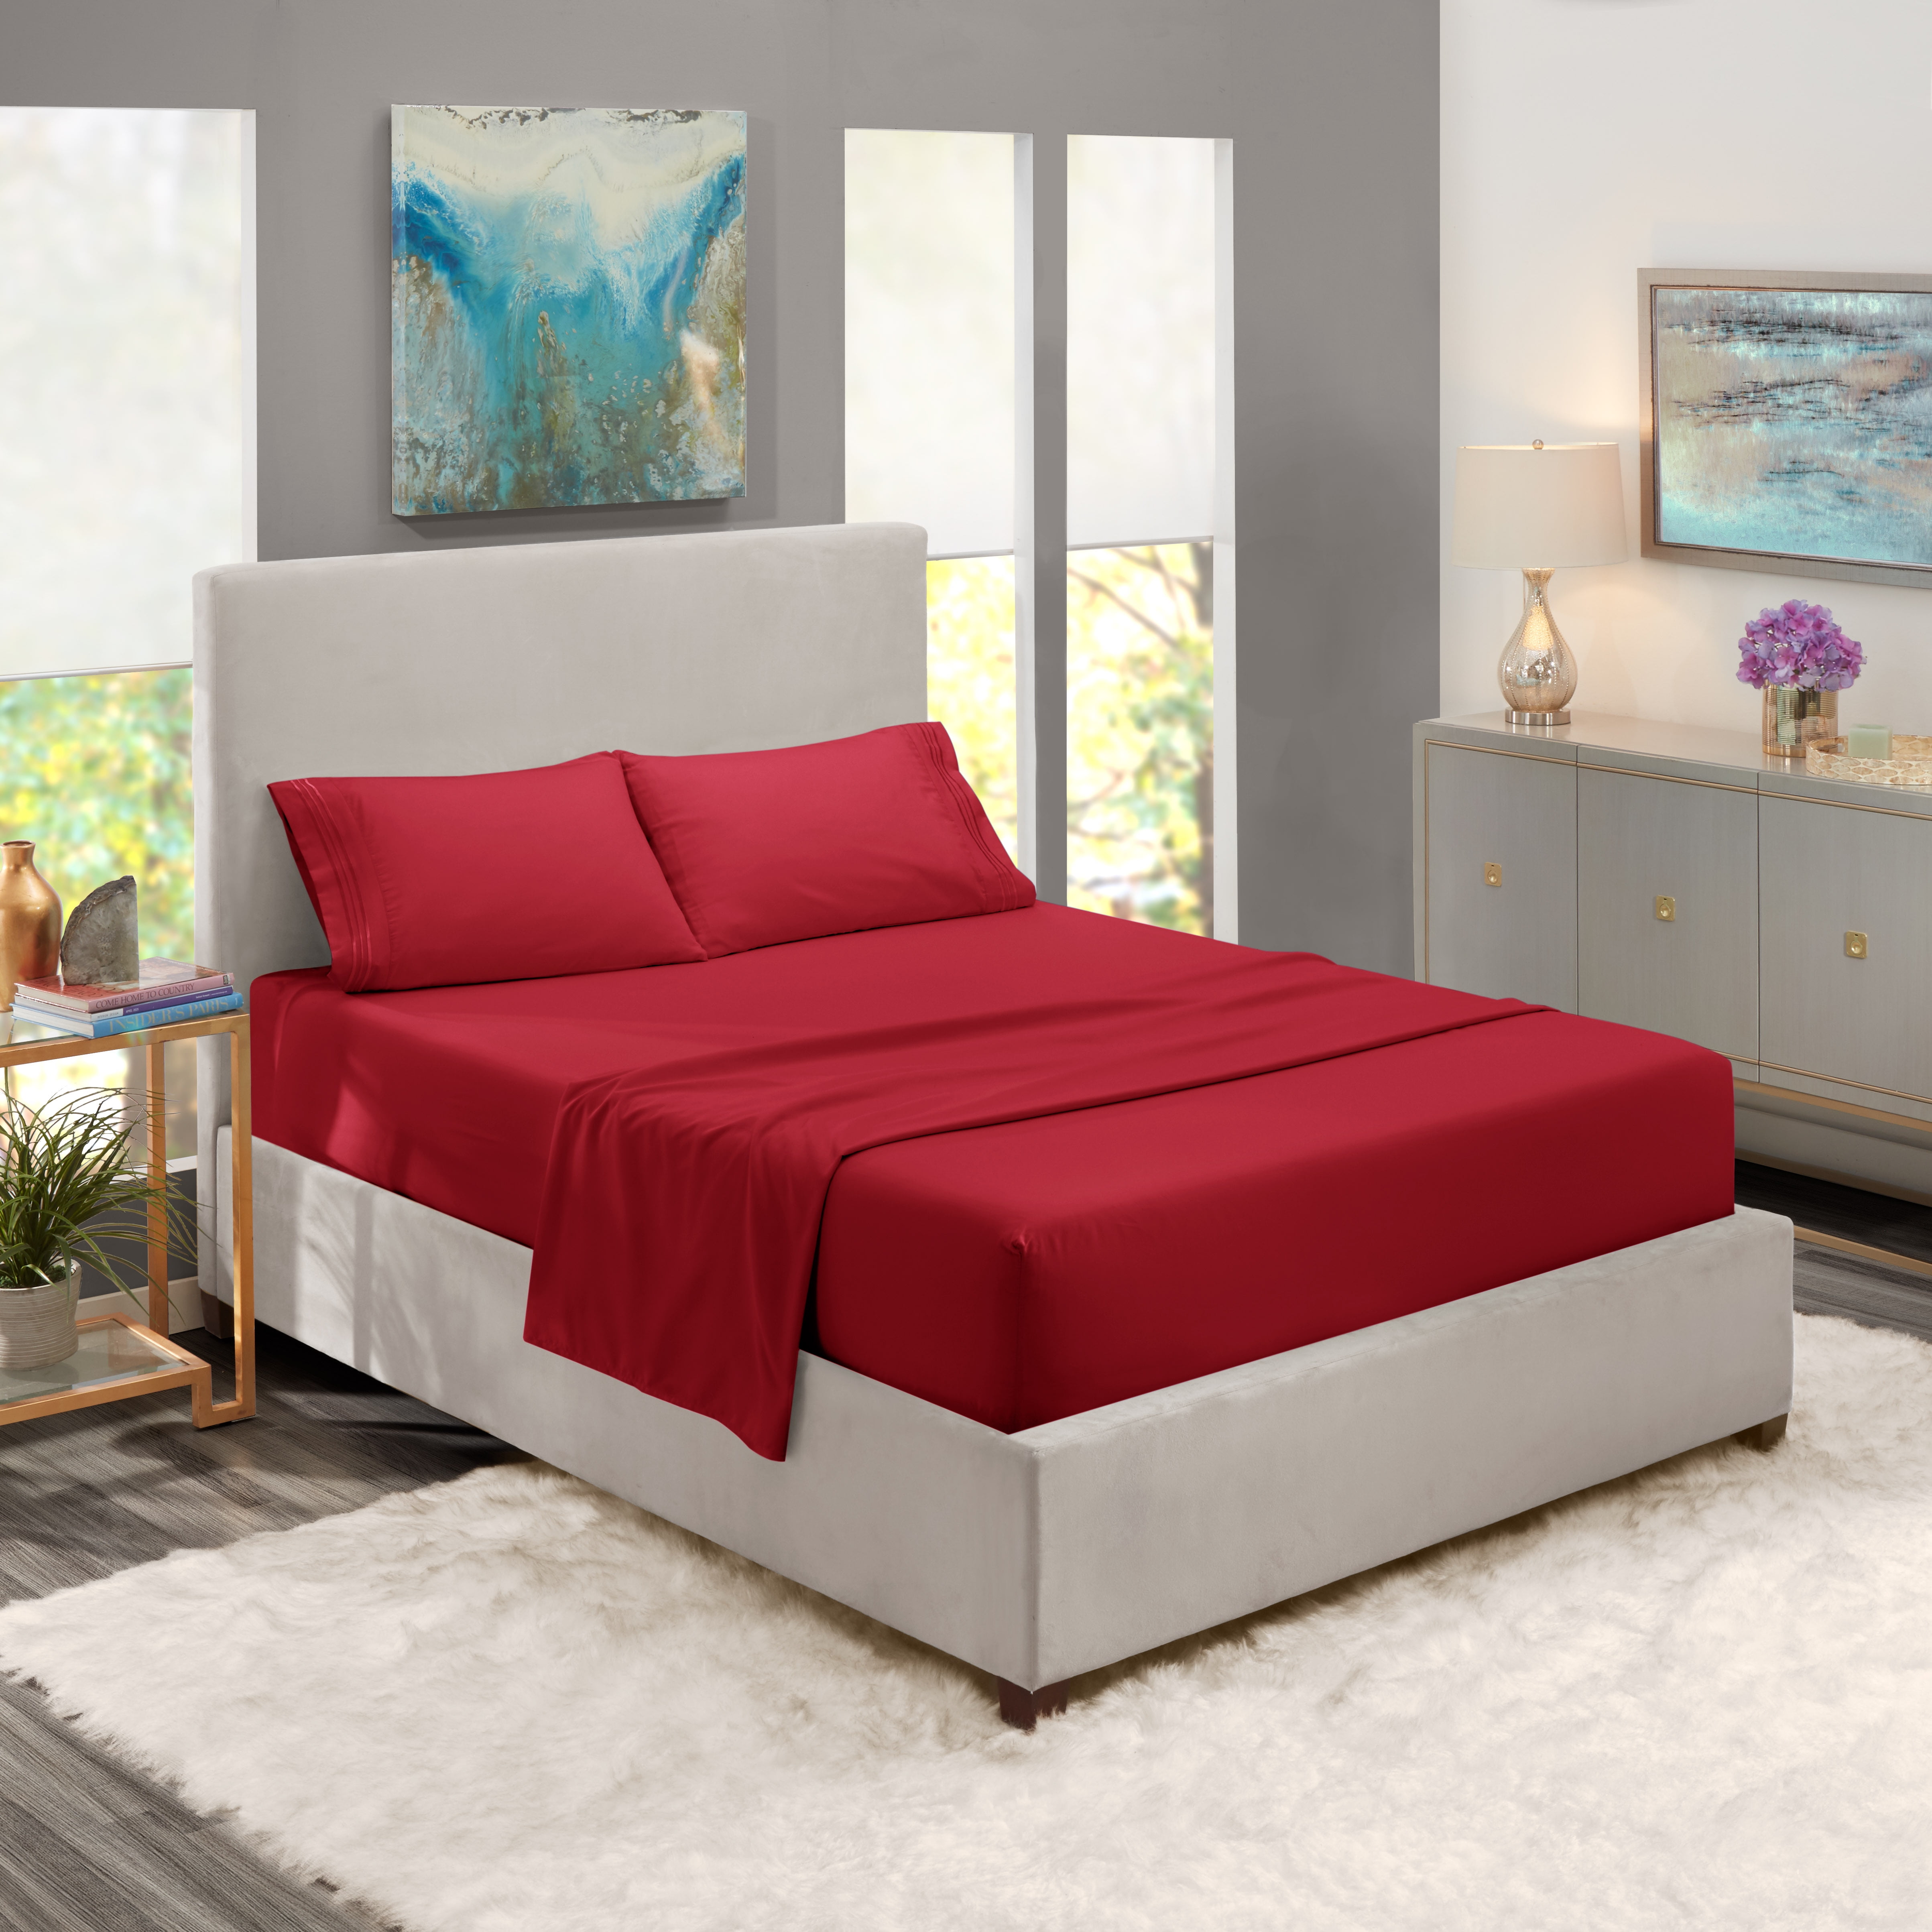 BURGUNDY NEW ARRIVE HIGH QUALITY SOFT SATIN 3PC SINGLE BED SHEET SET 